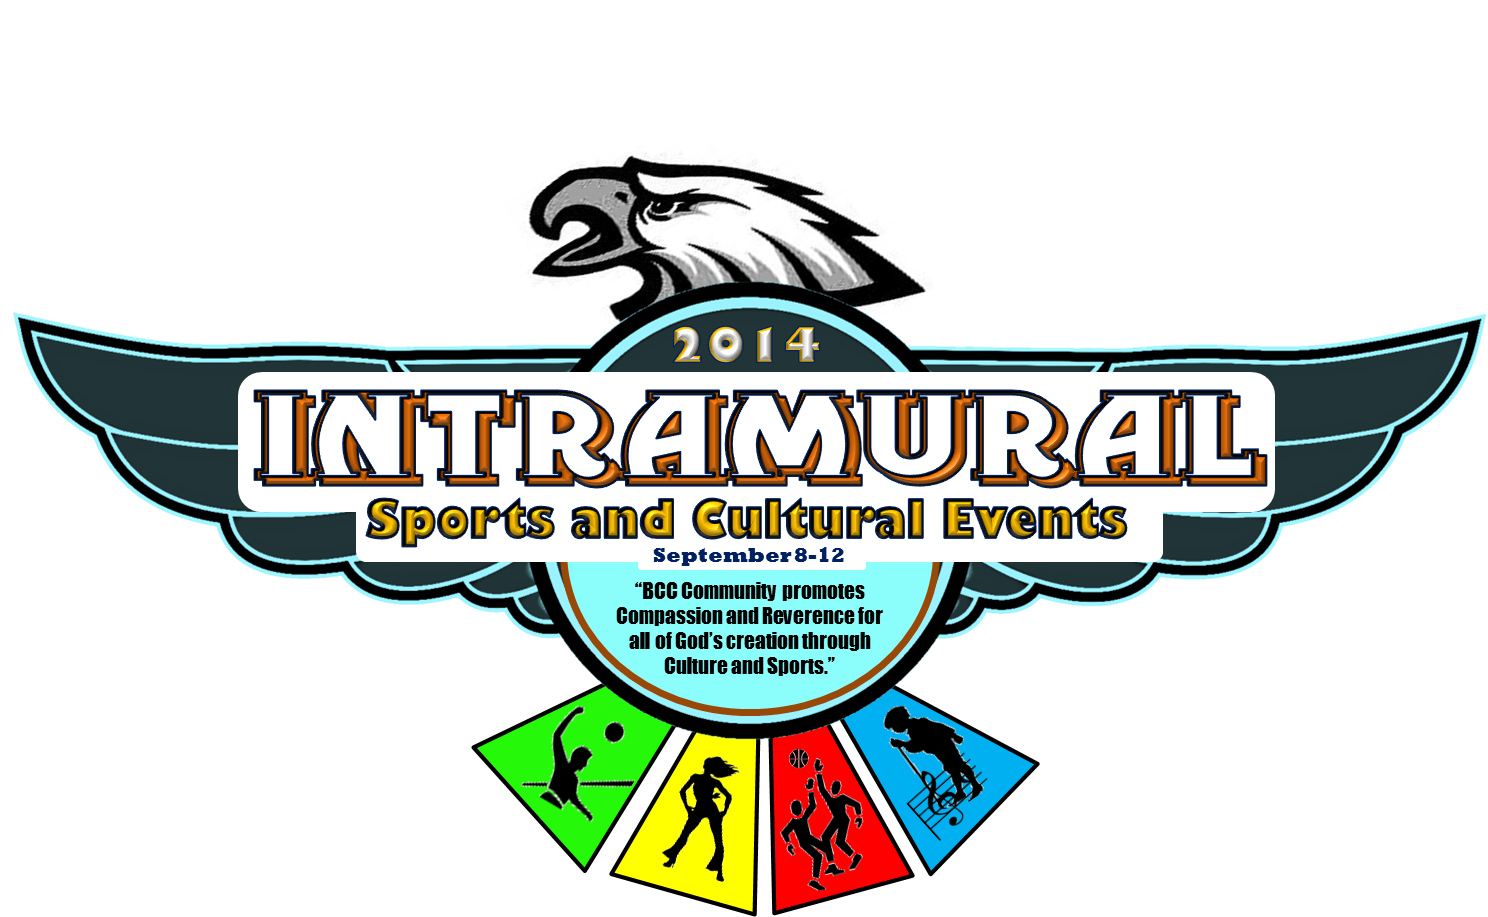 intramurals logo design